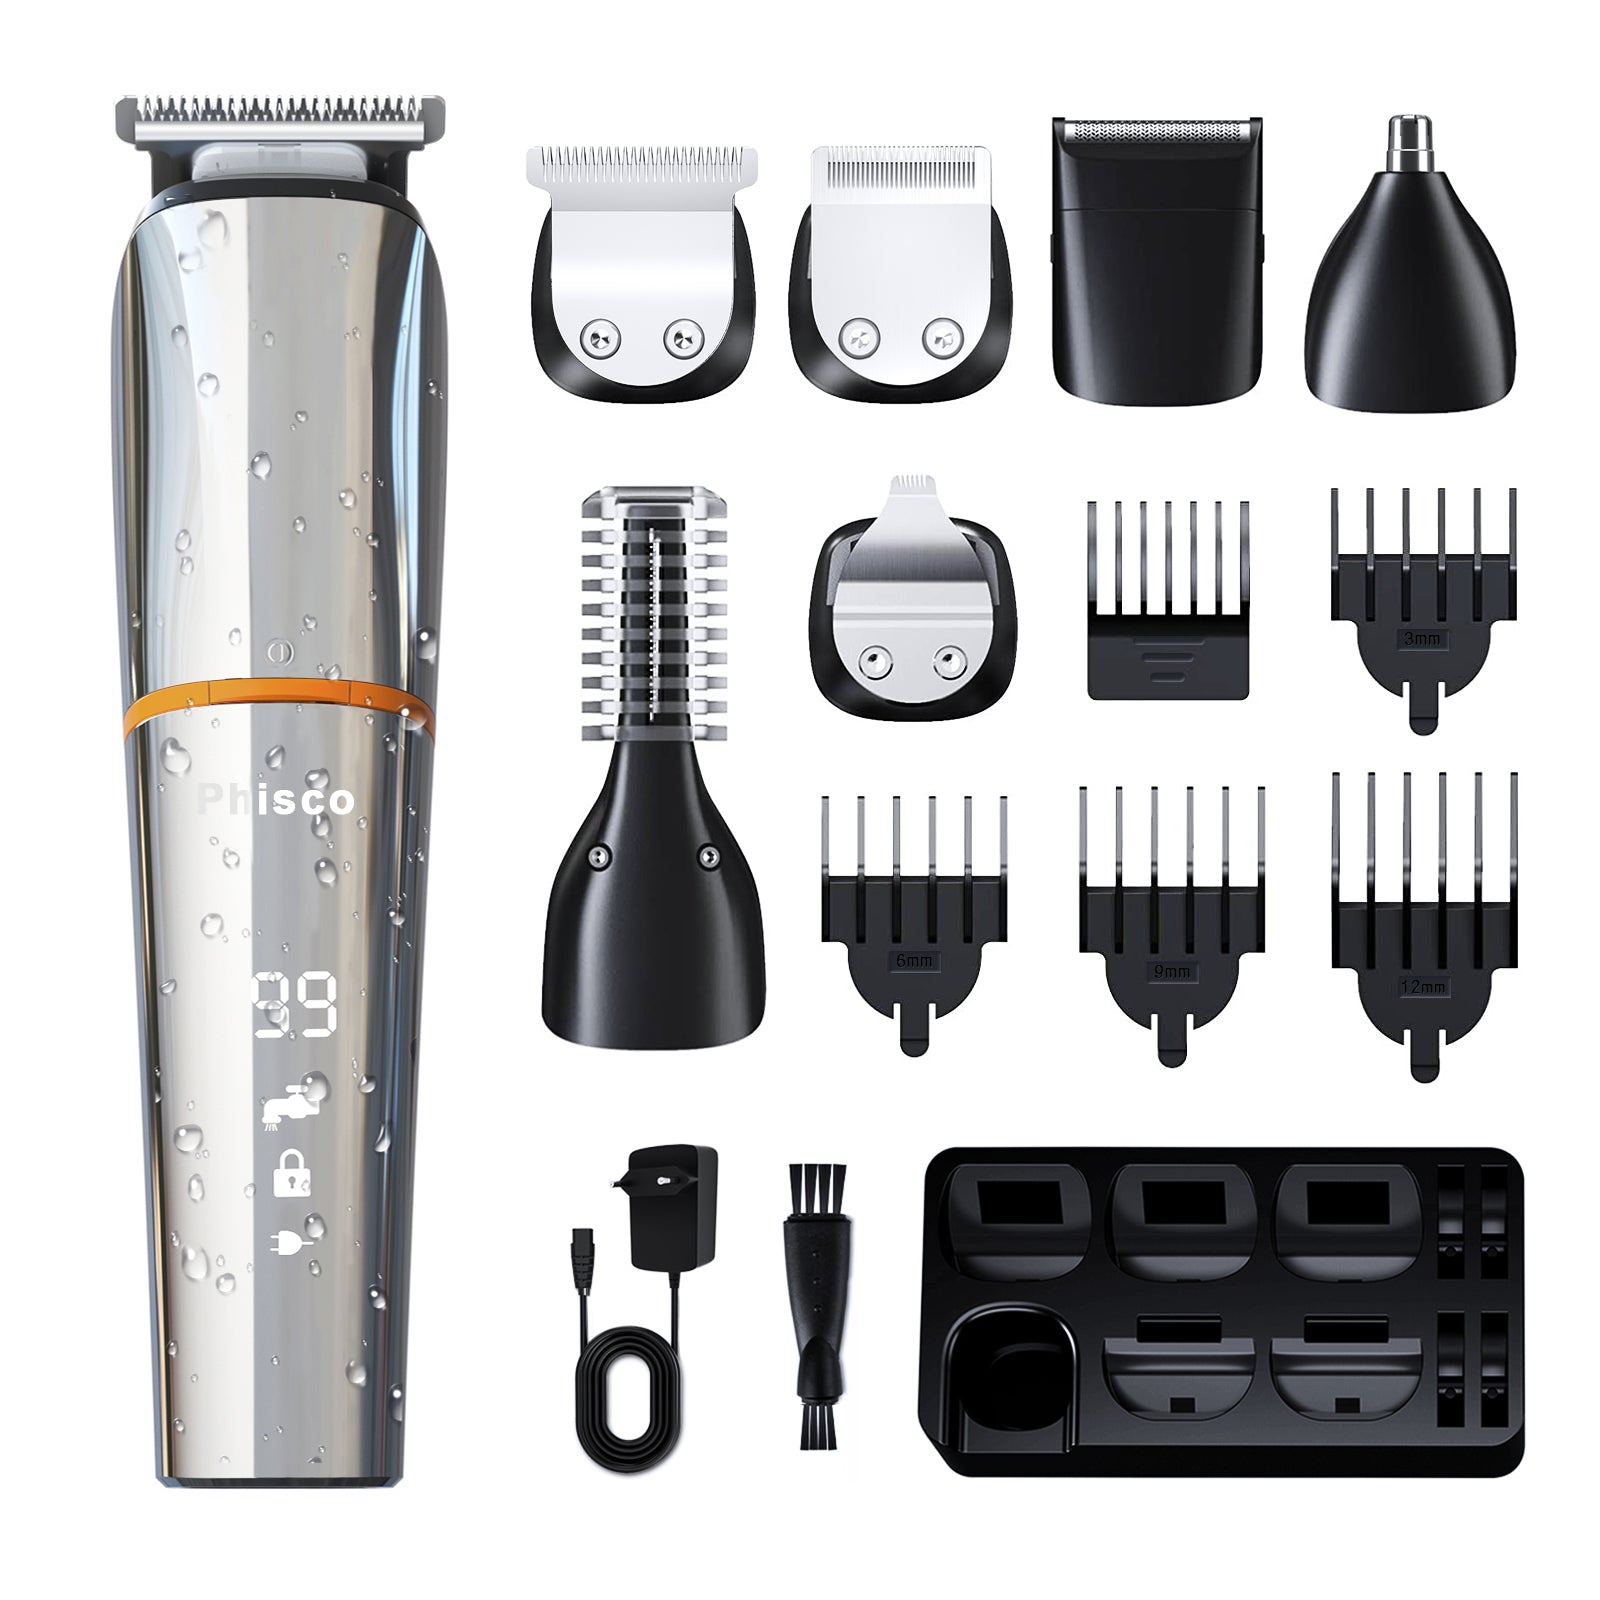 Phisco Rechargeable Wet & Dry Hair Groomer Cordless Precision Trimmer 6 in 1 Kit for men